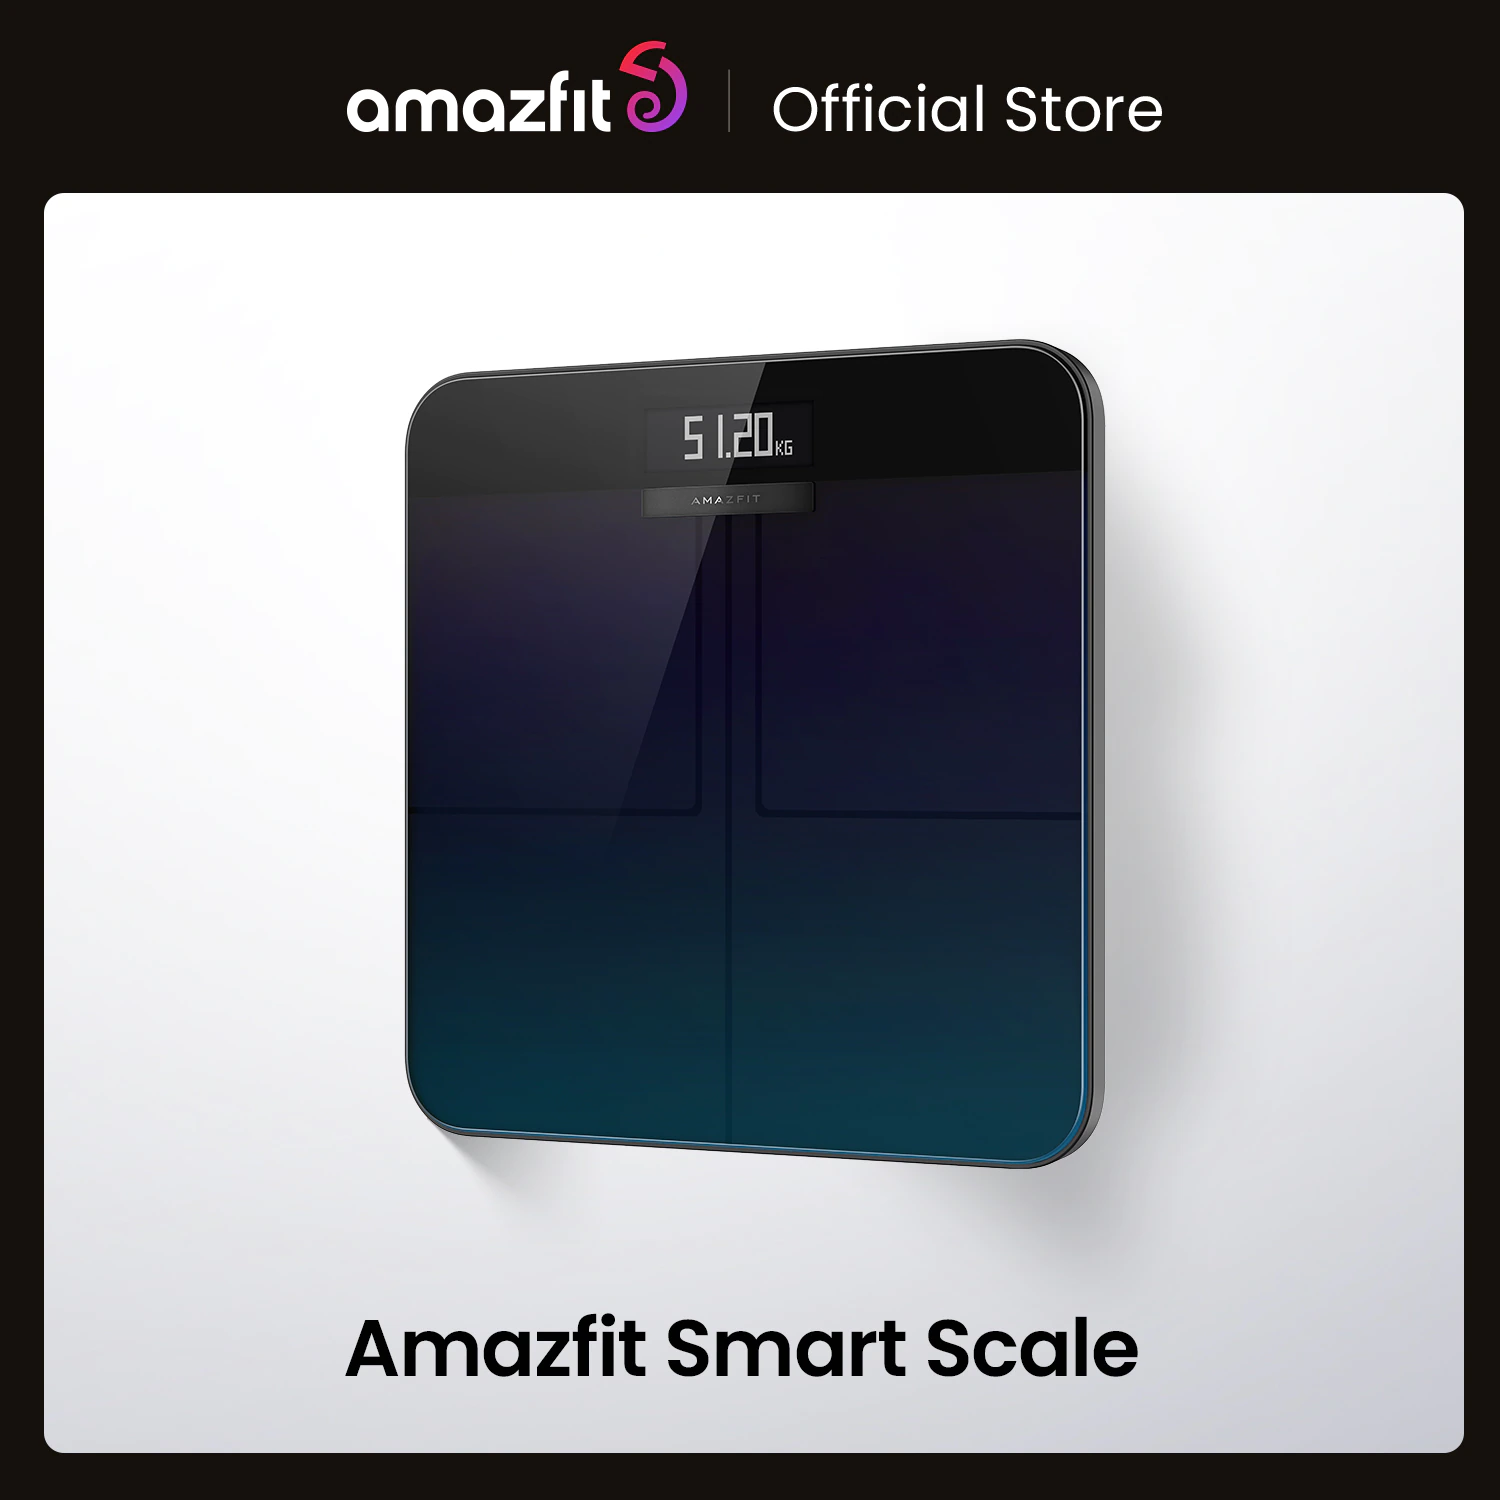 Смарт-весы Amazfit с ЖК-дисплеем, 2020 кг, Wi-Fi